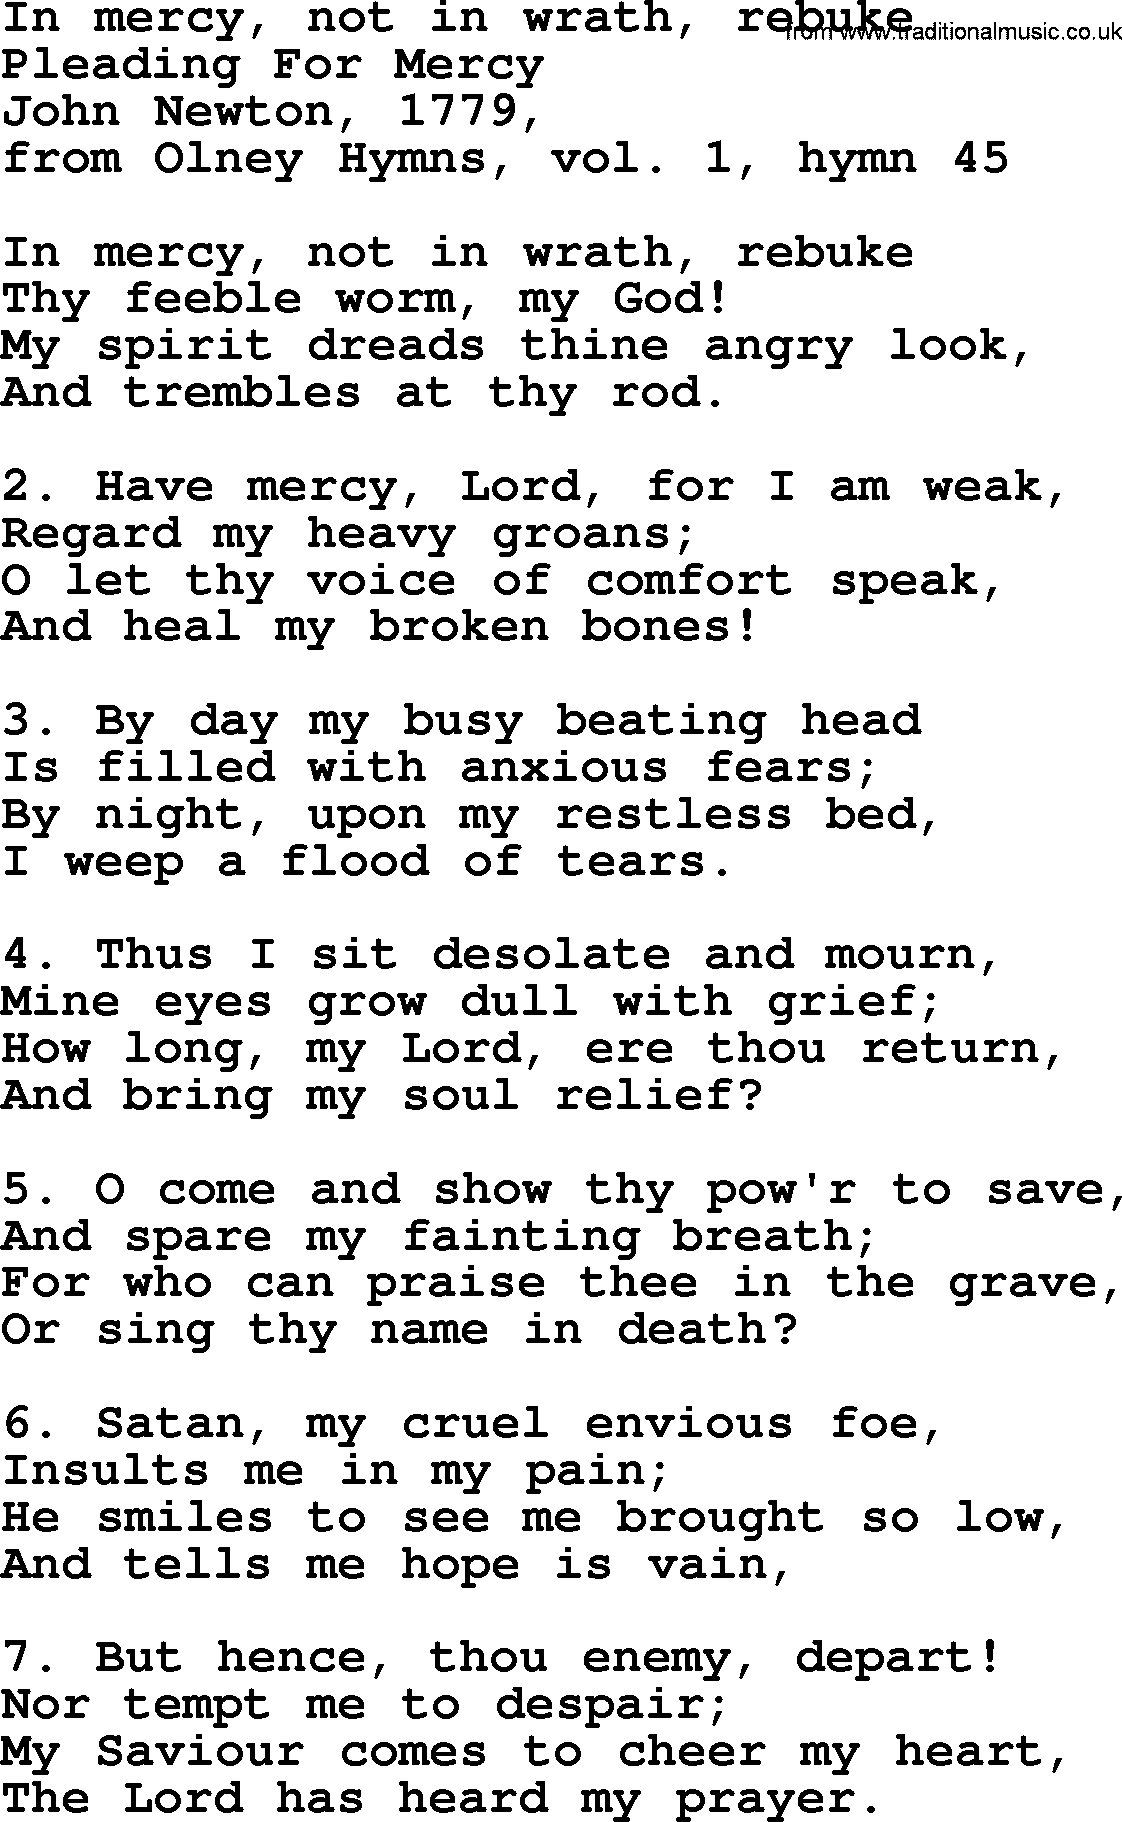 John Newton hymn: In Mercy, Not In Wrath, Rebuke, lyrics